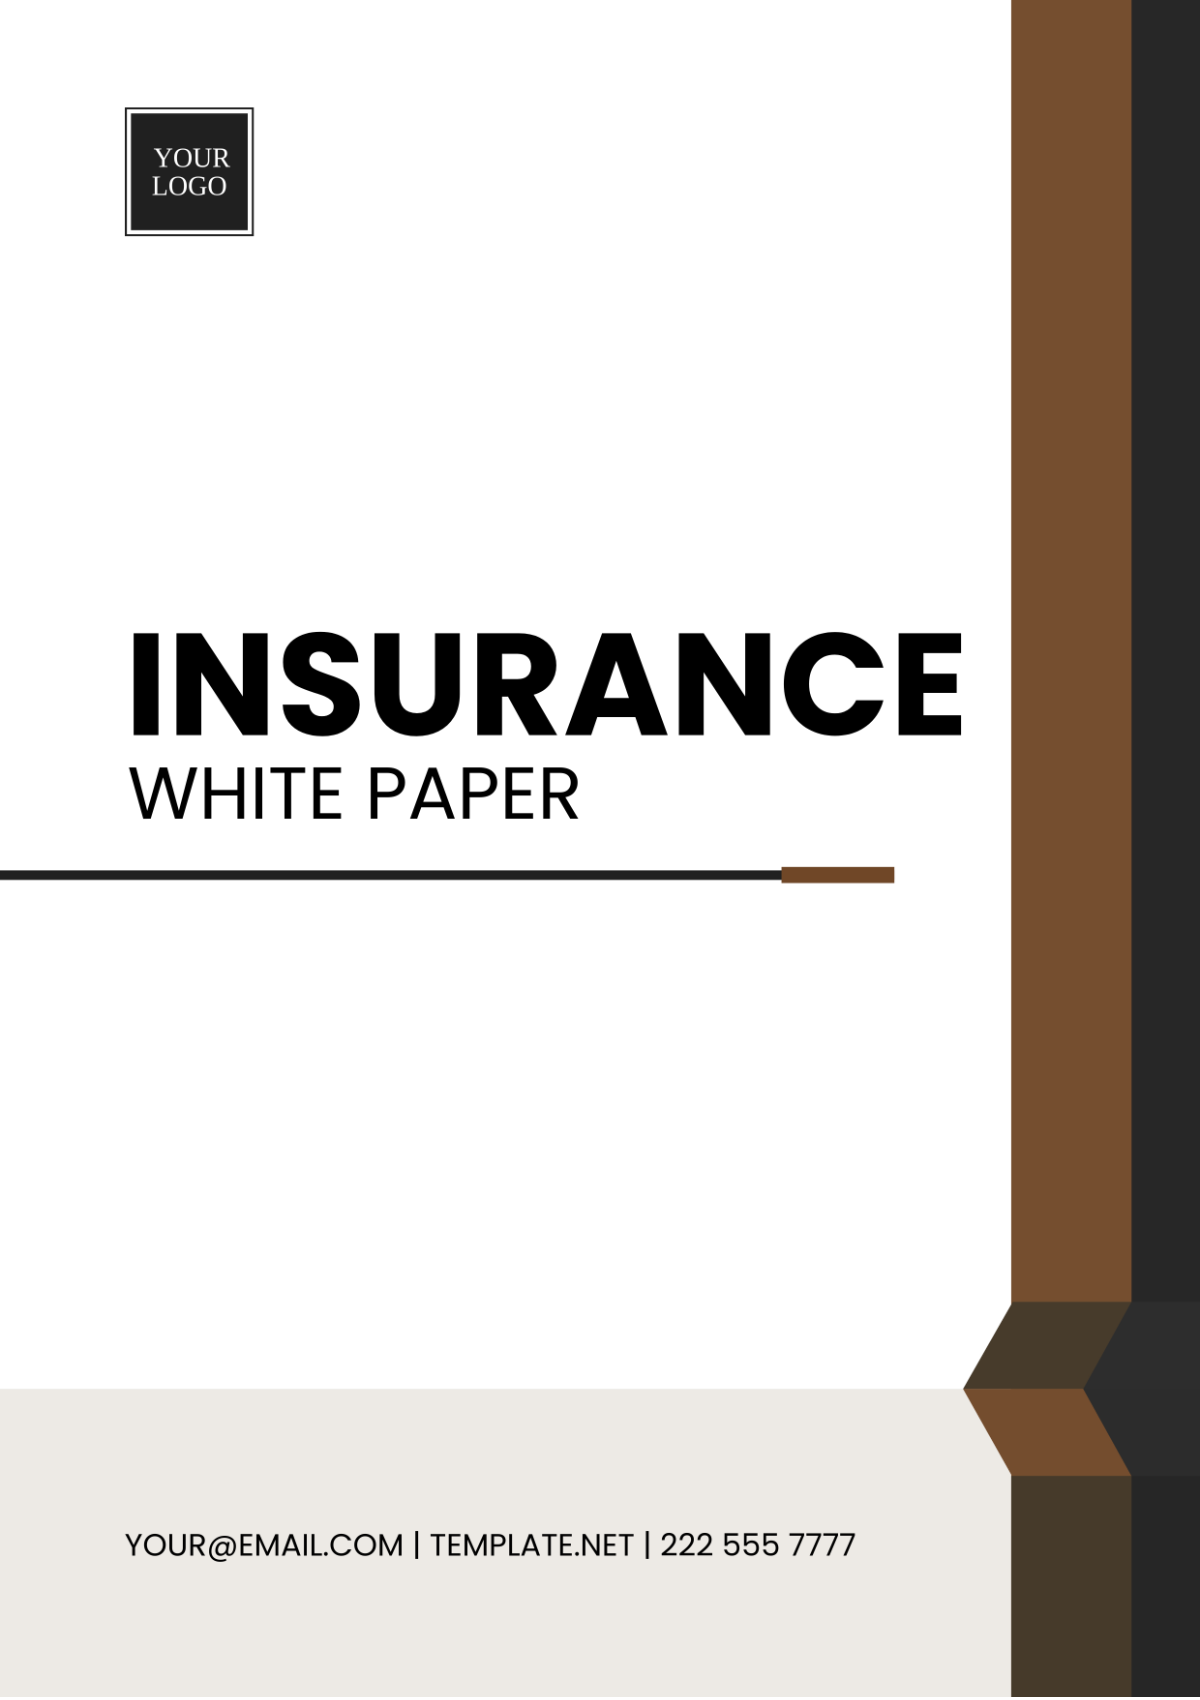 Insurance White Paper Template